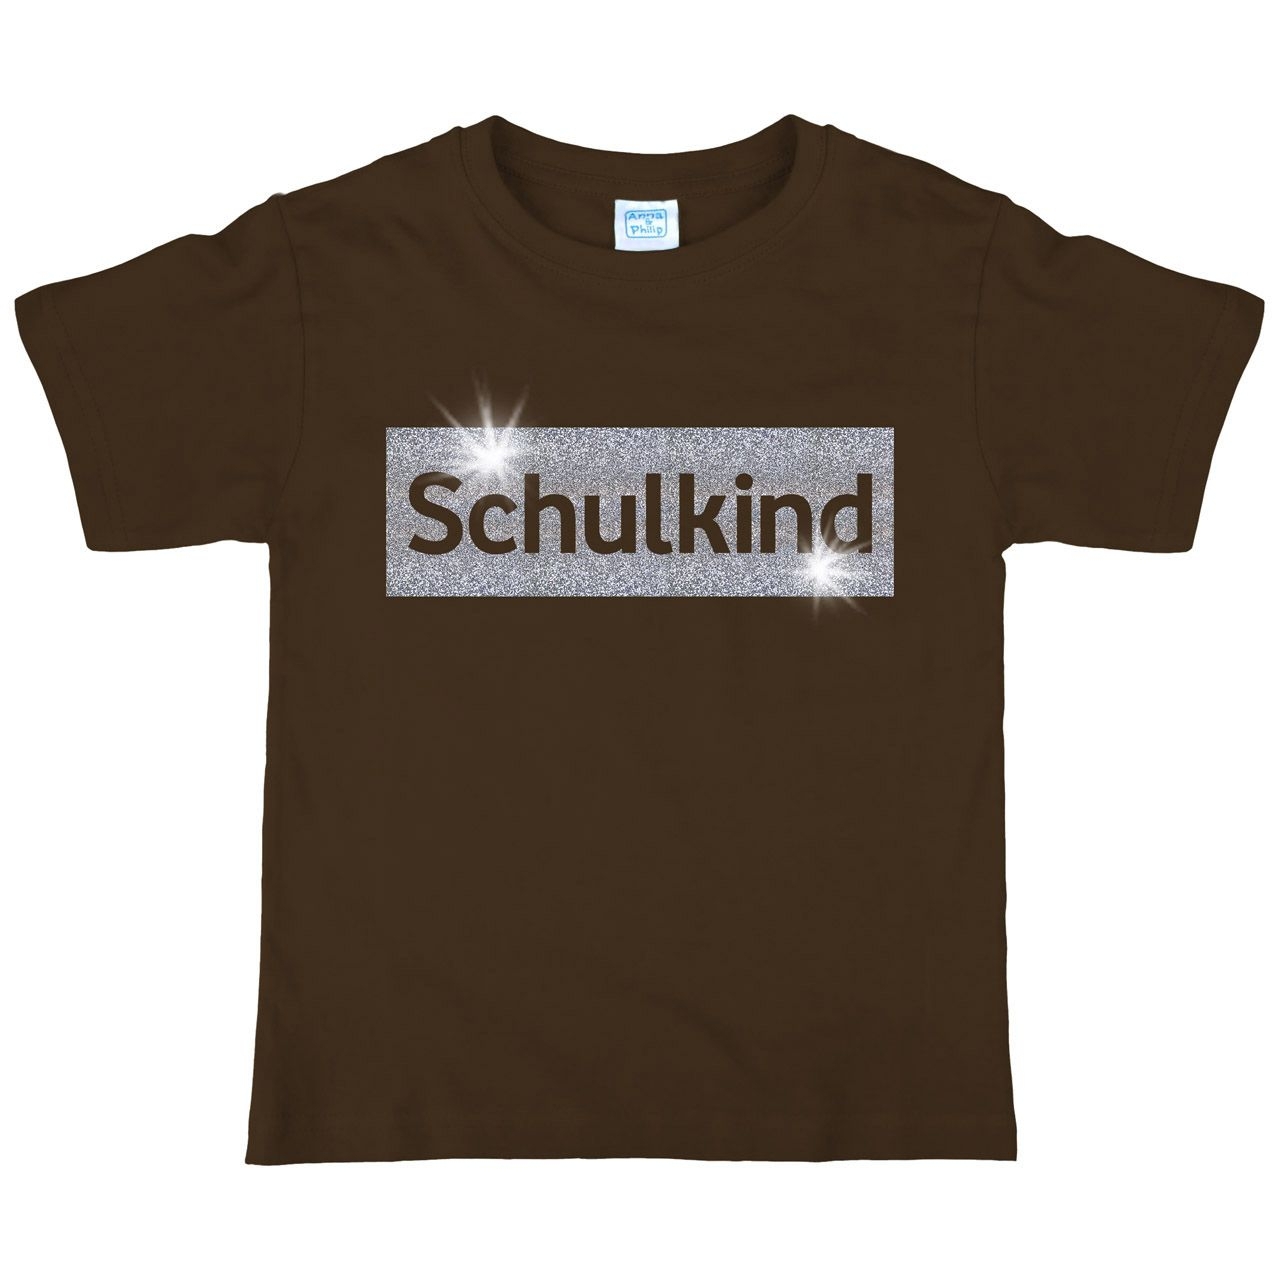 Schulkind Glitzer Kinder T-Shirt mit Namen braun 122 / 128